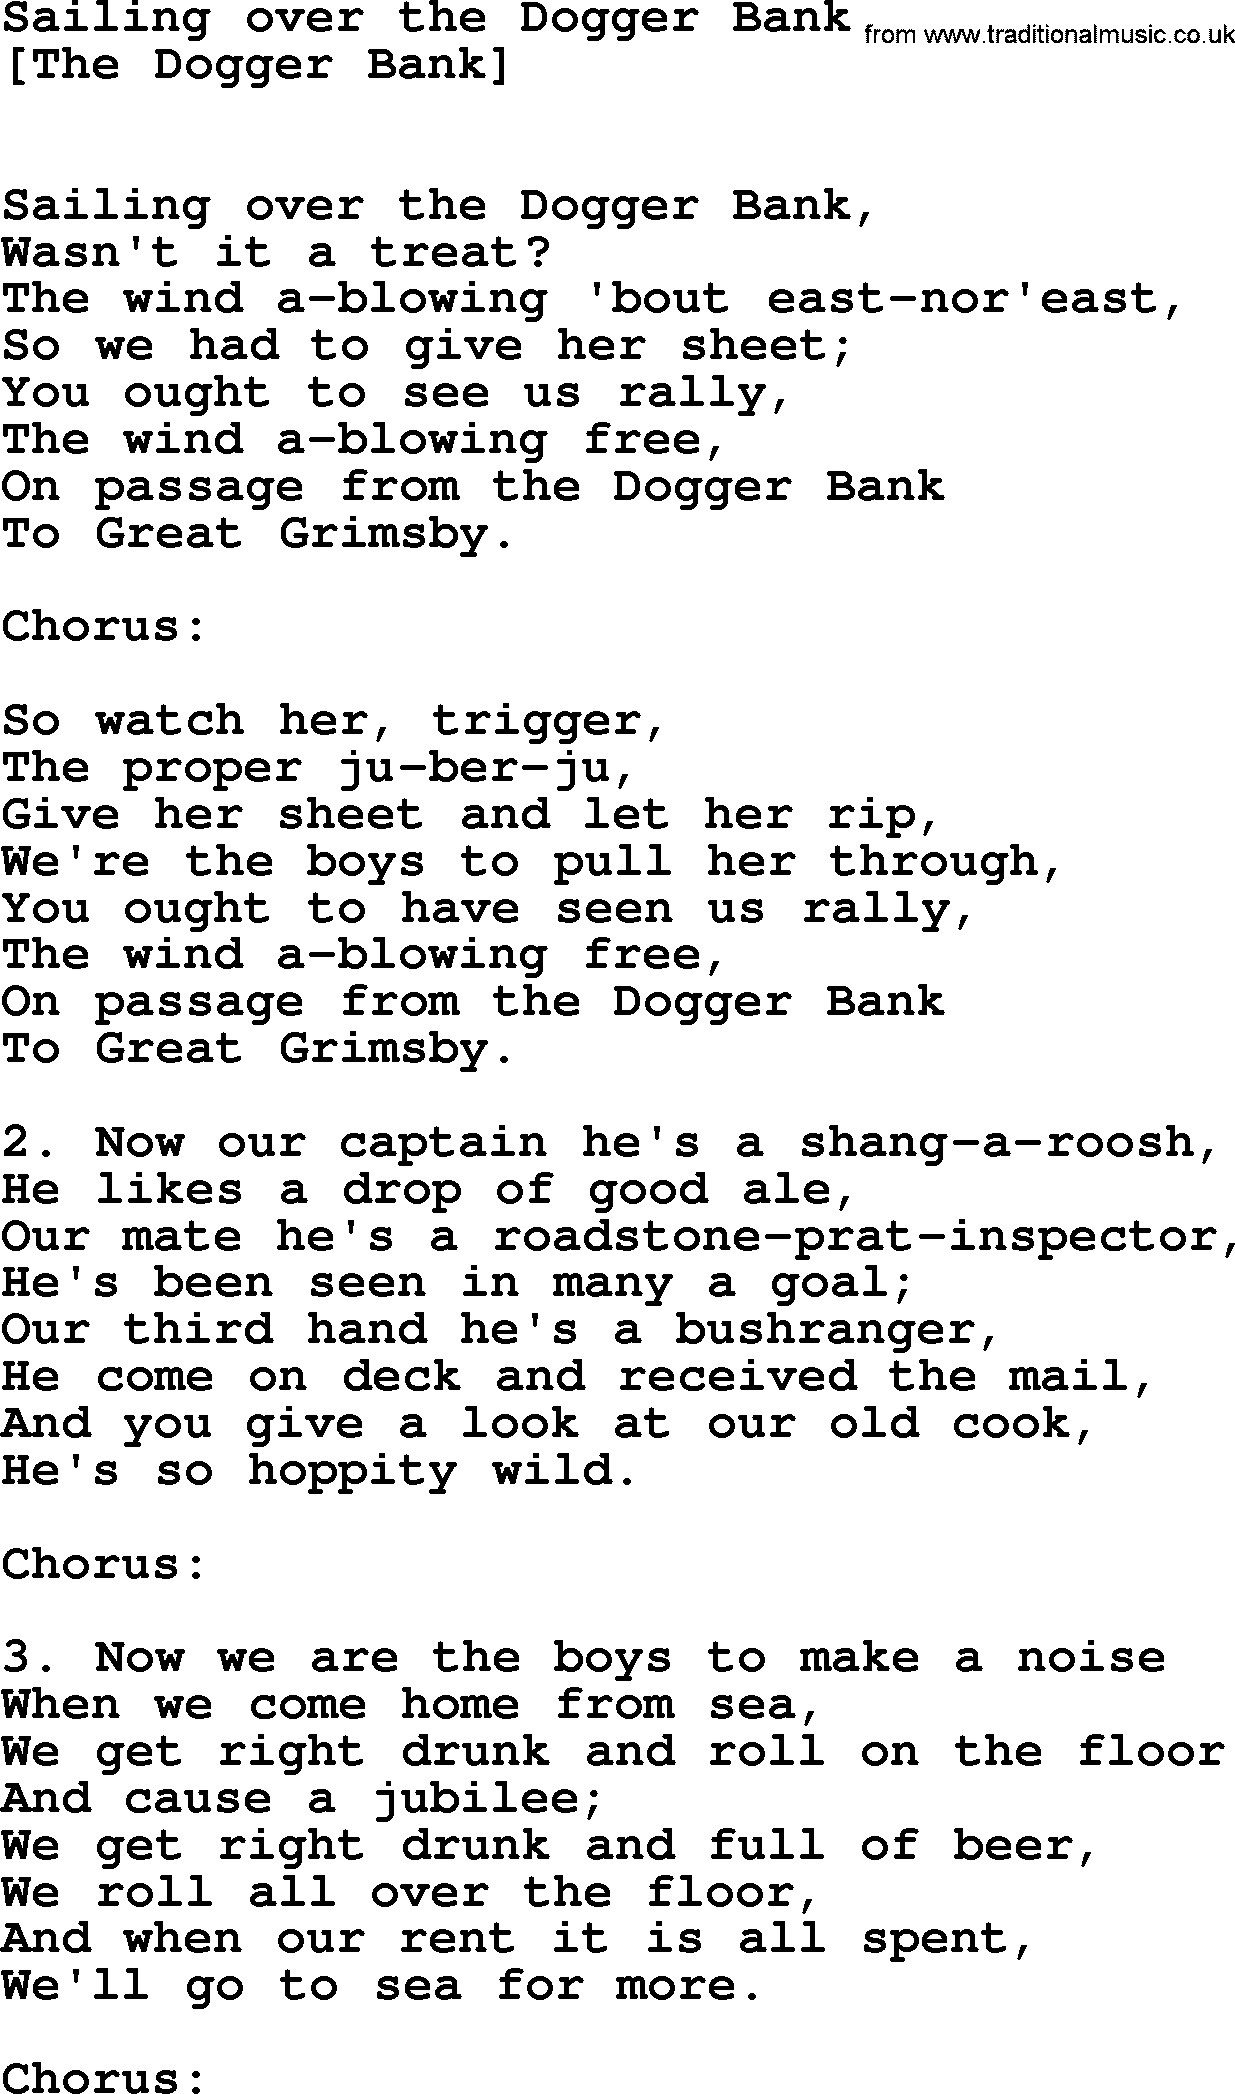 Old English Song: Sailing Over The Dogger Bank lyrics